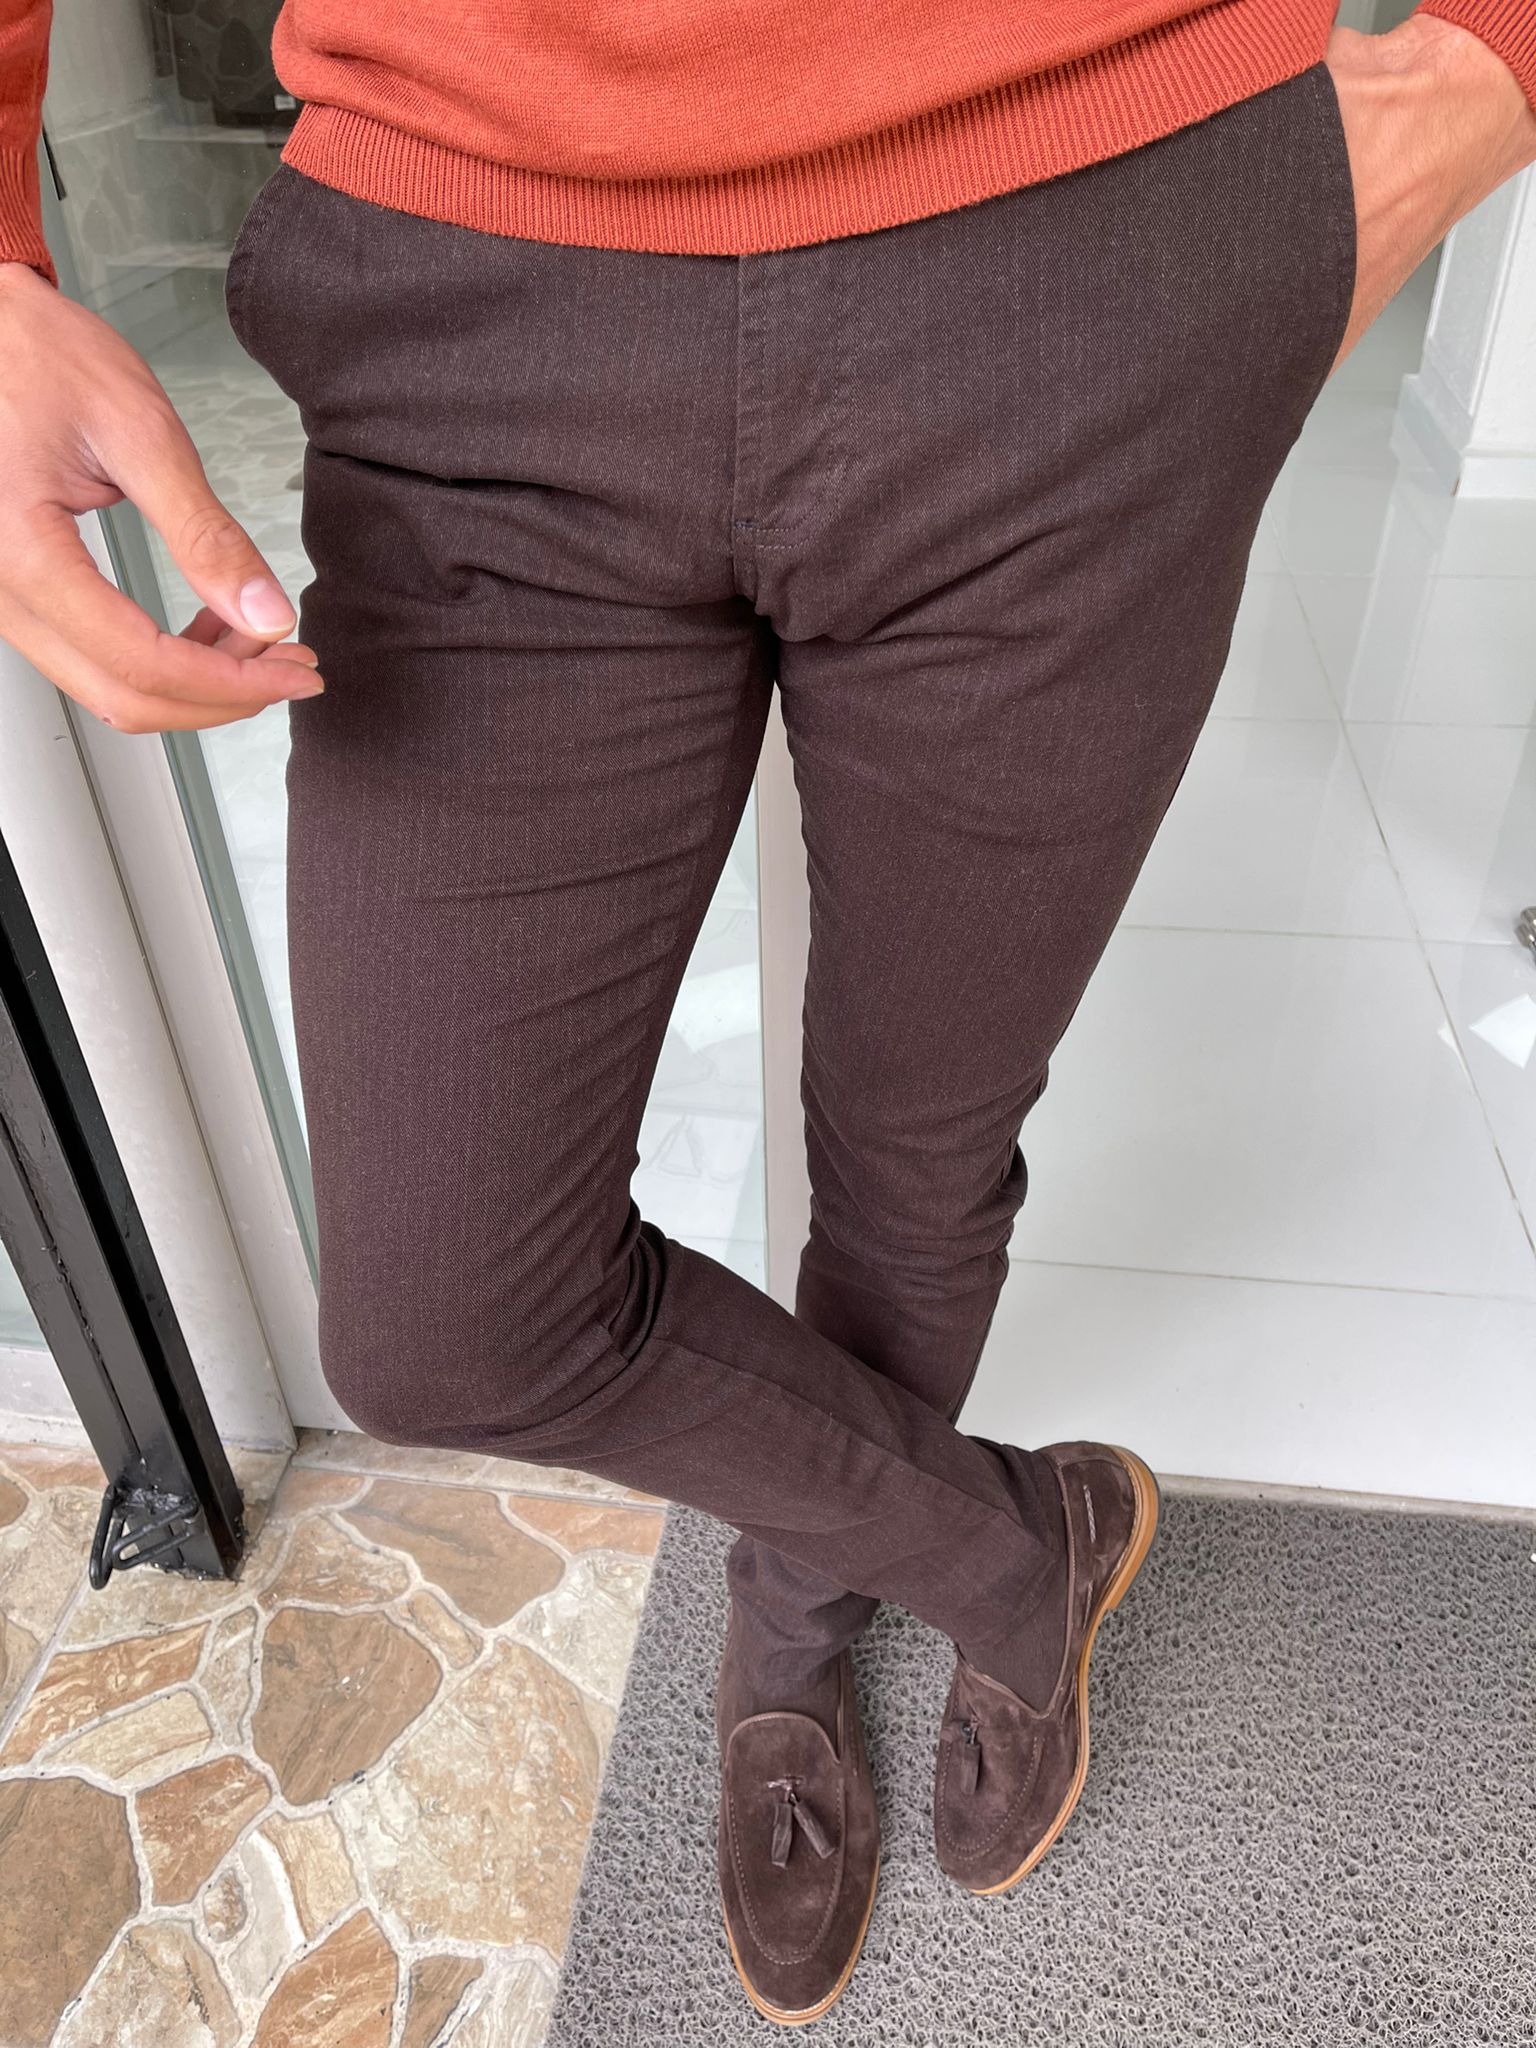 Oslo Burgundy Slim Fit Cotton Lycra Pants